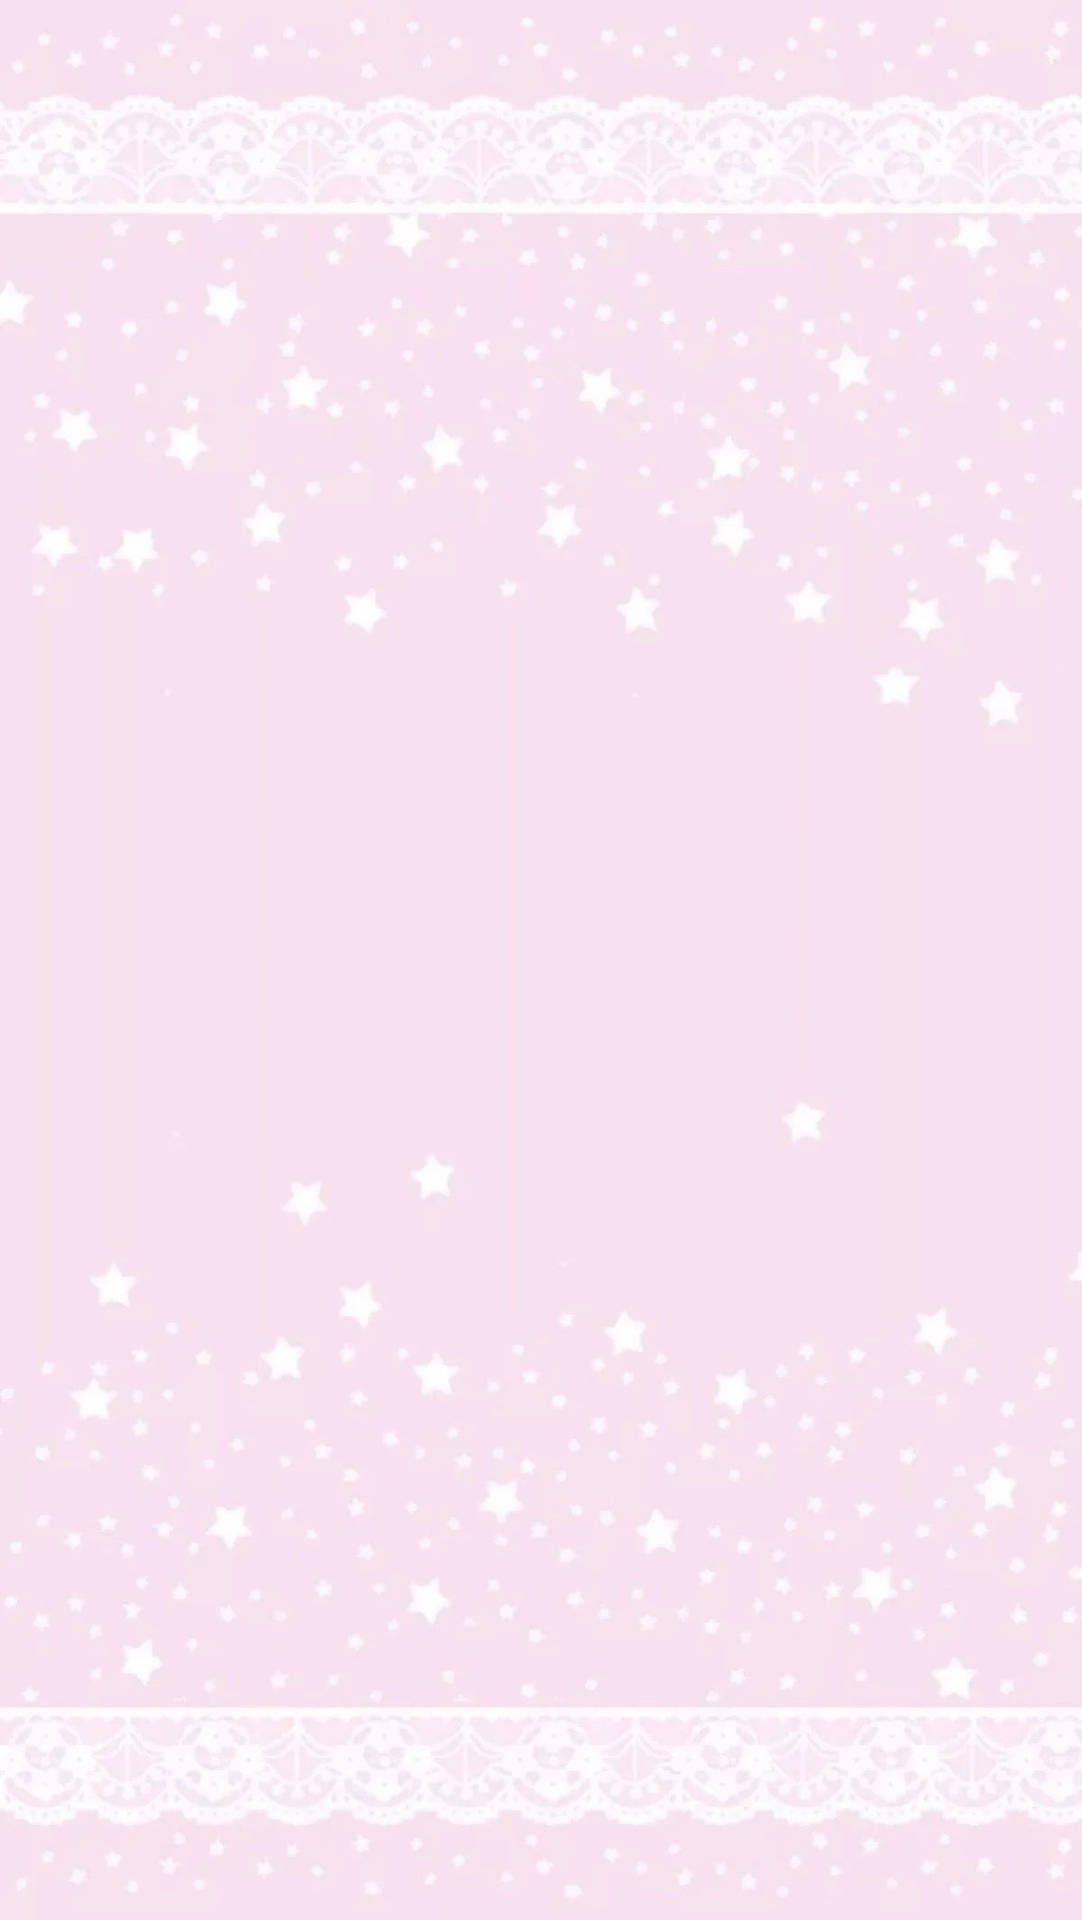 Kawaii Pink Wallpaper With Stars And Borders